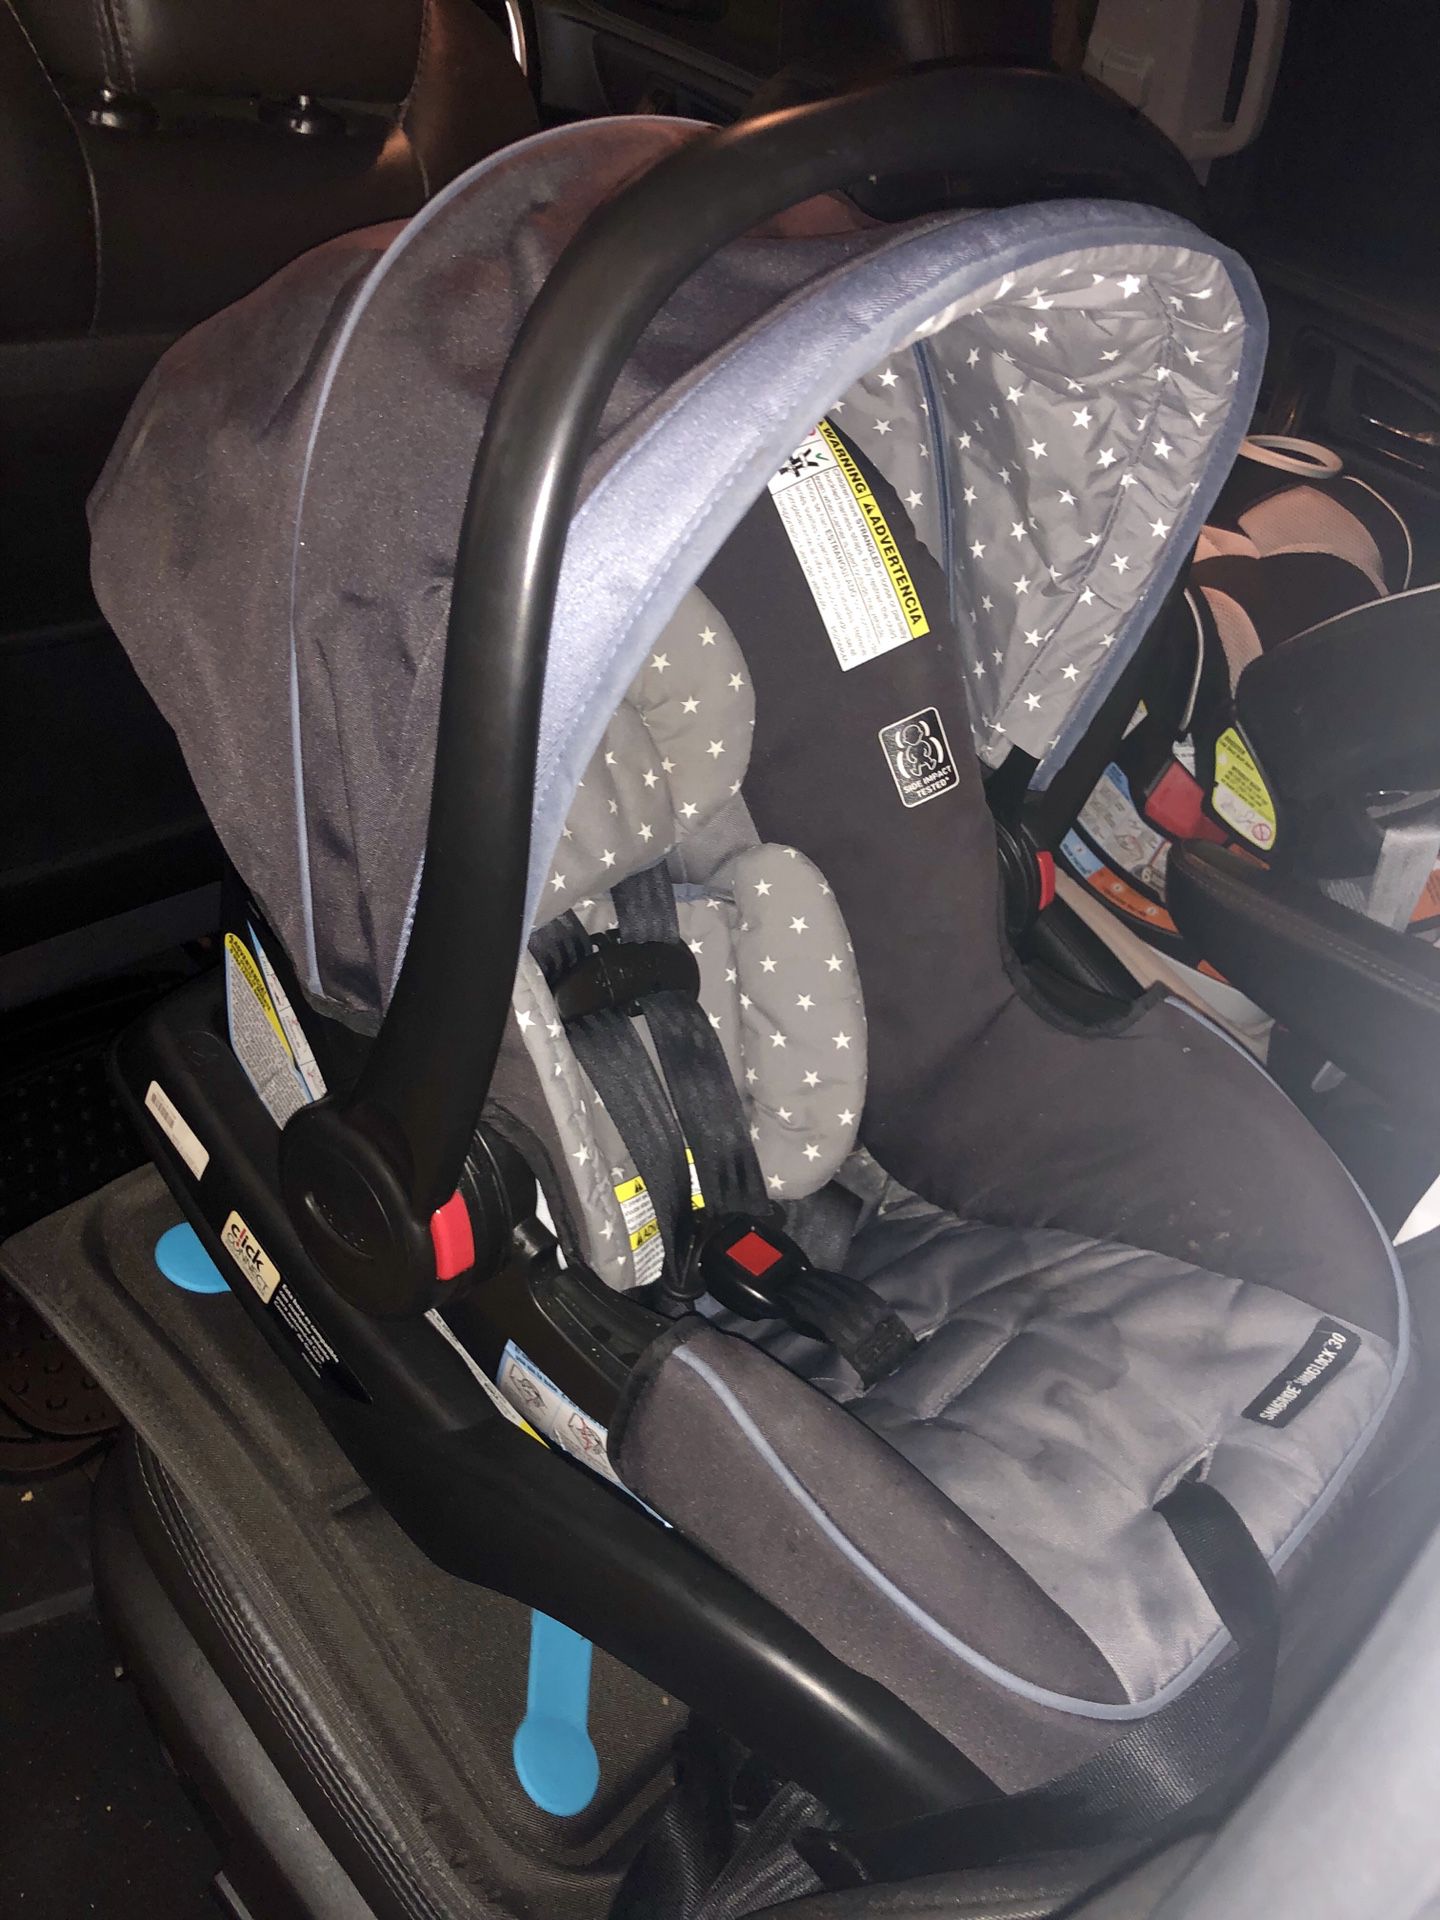 Graco Snuglock infant car seat